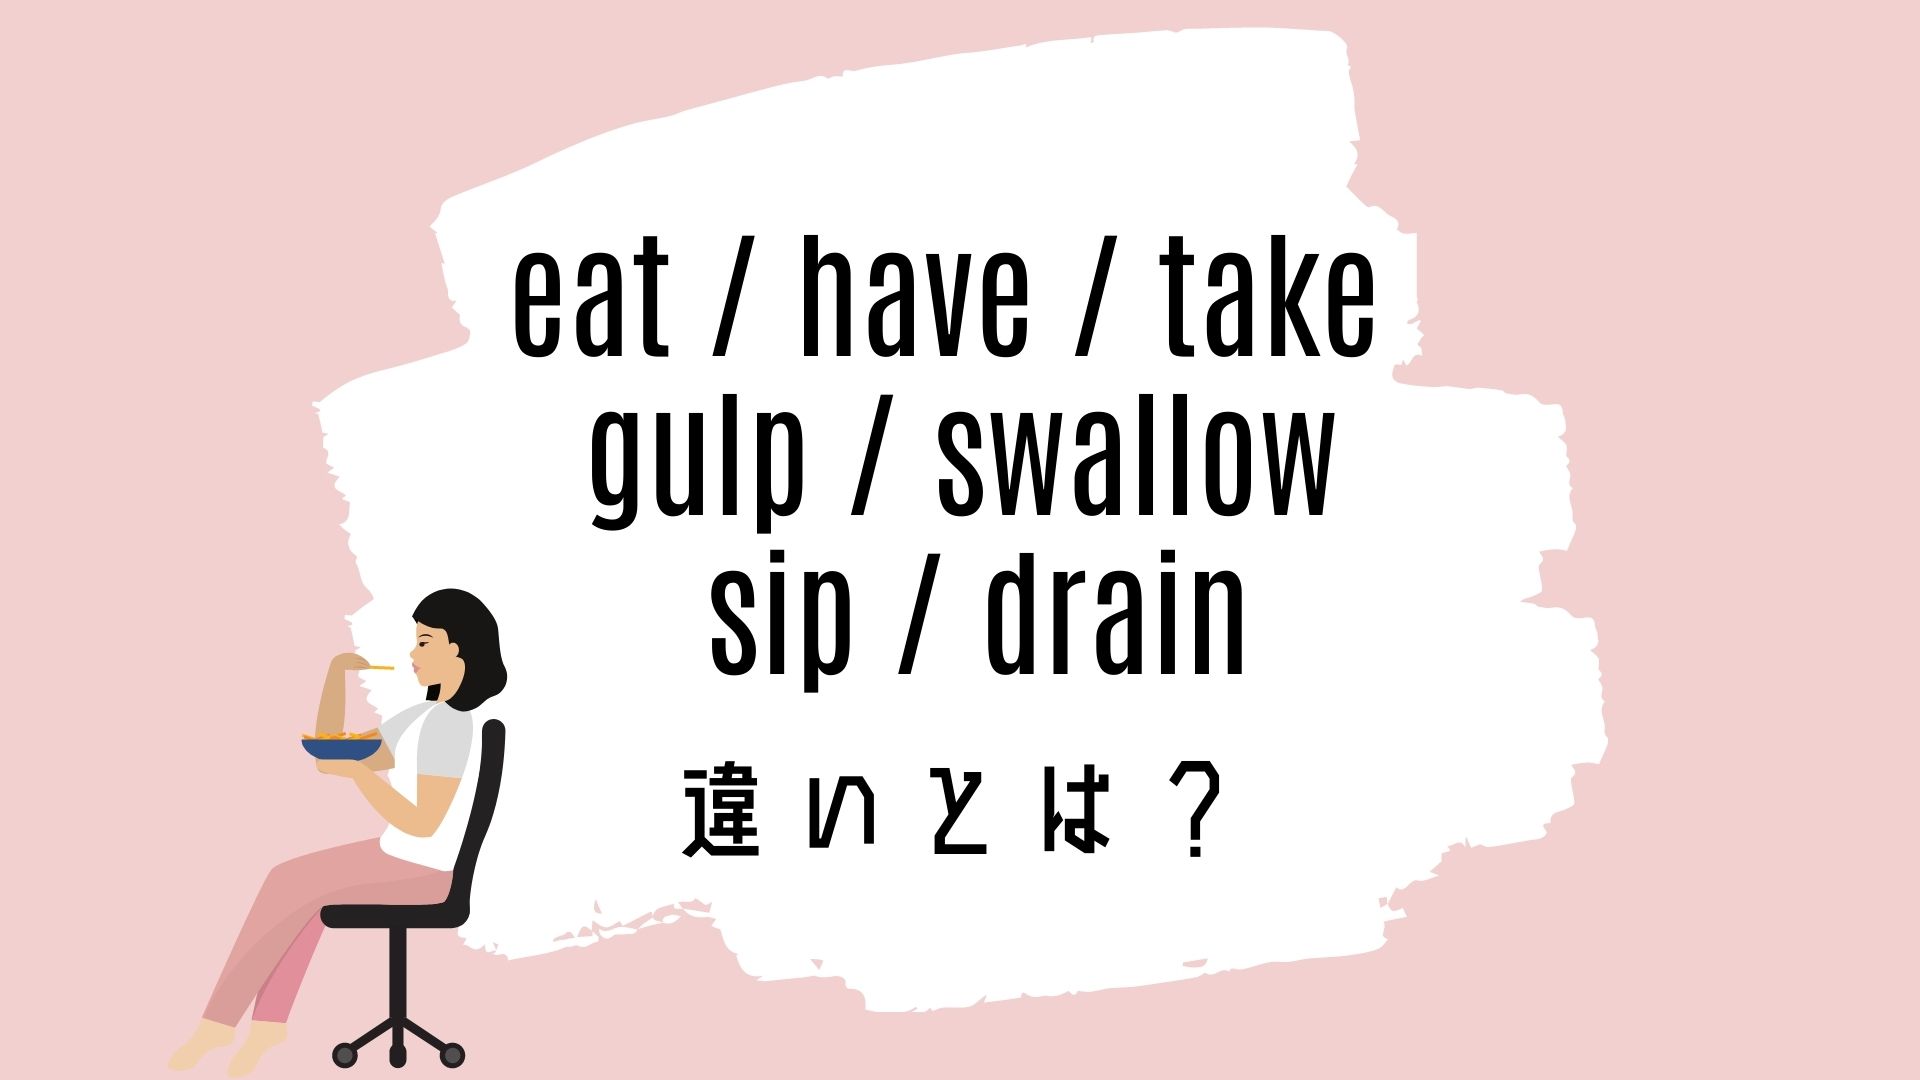 eat / have / take / gulp / swallow / sip / drainの意味の違いとは？使い方を解説